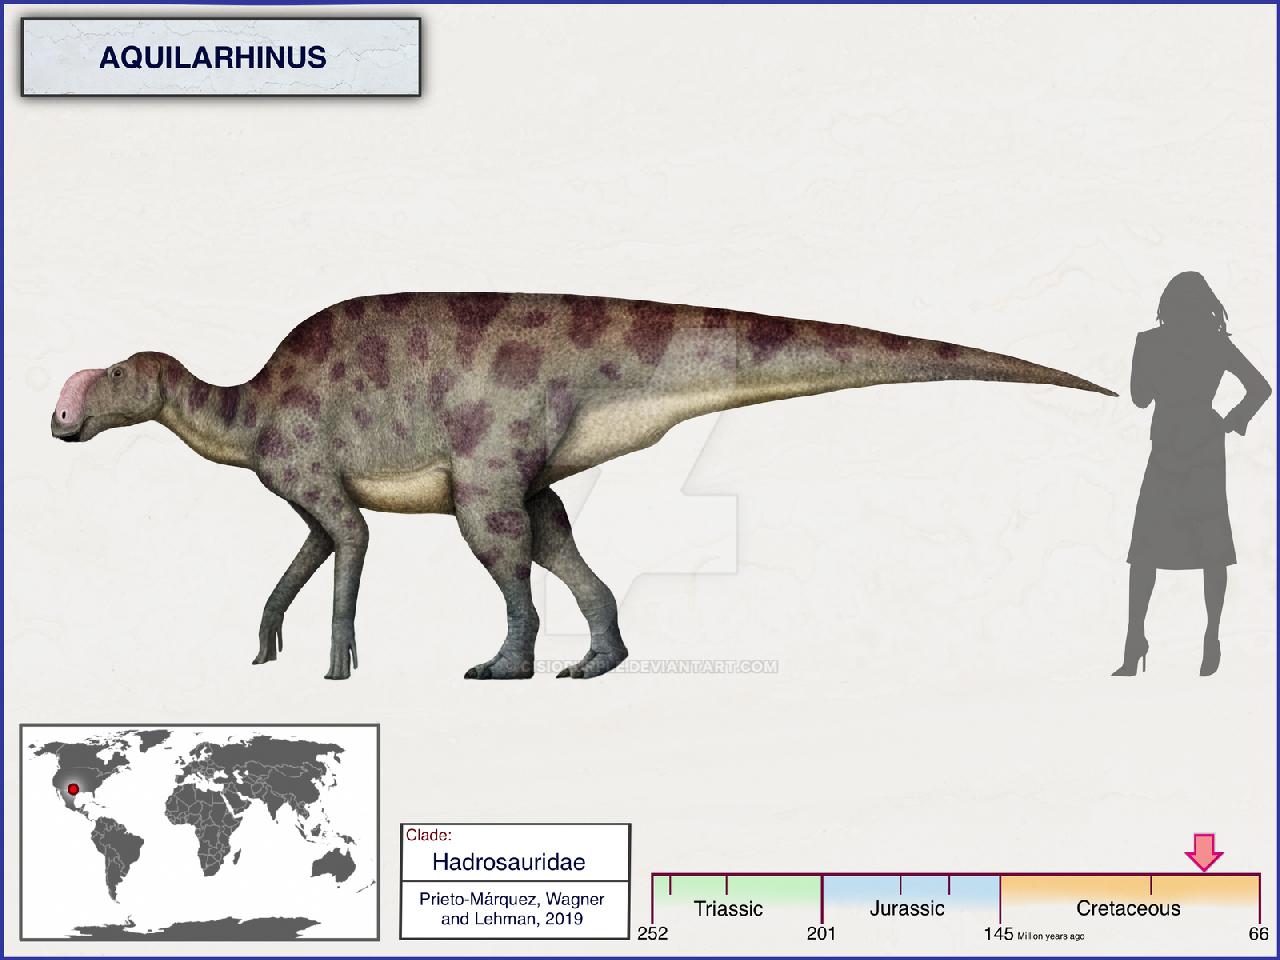 Aquilarhinus, Cretaceous
(Меловой период)